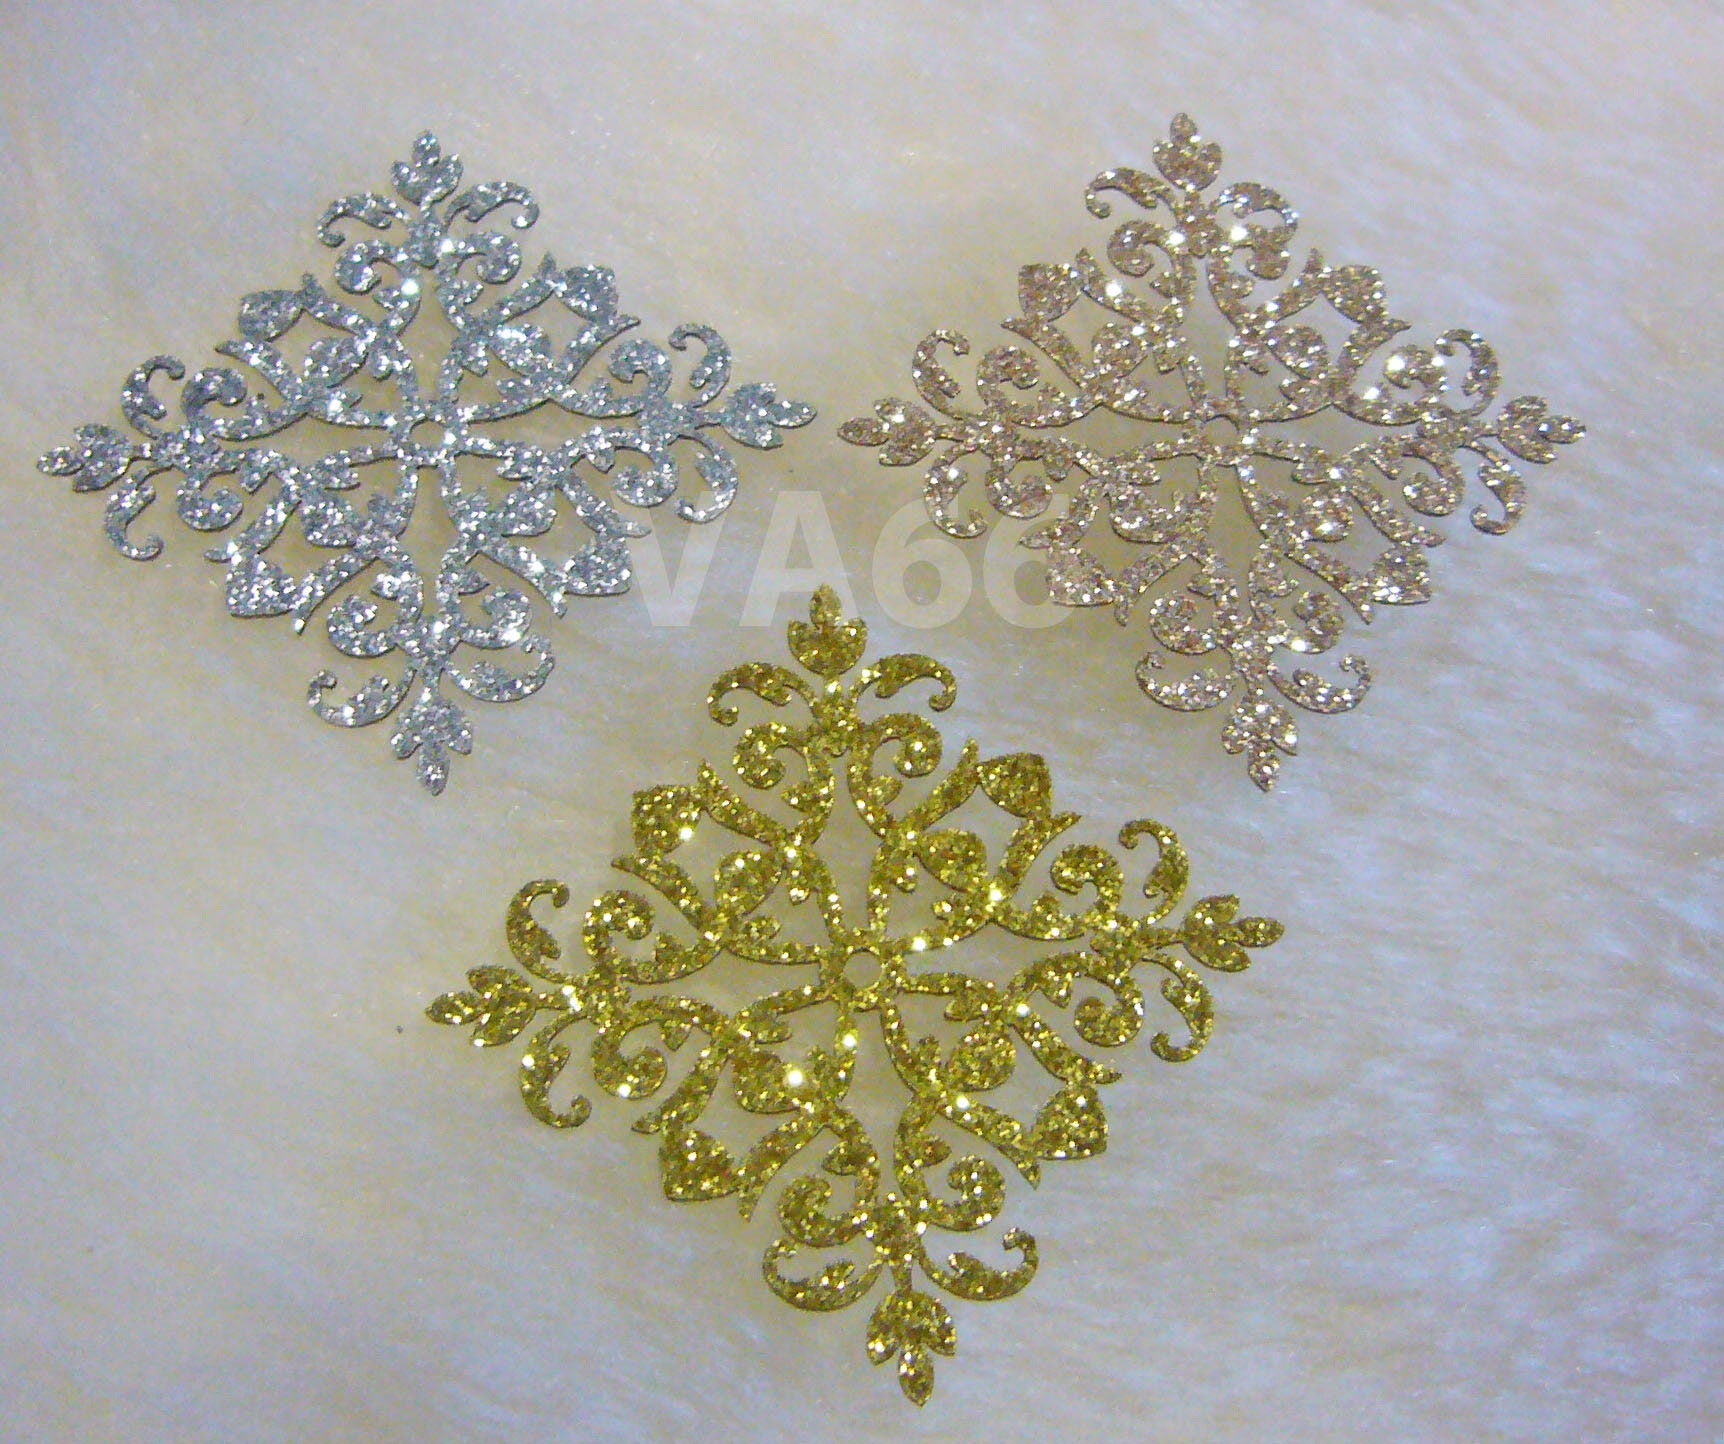 Round Sew on Rhinestones Crystal Clear 8mm DIY 8p 13mm 4 Hole Gold